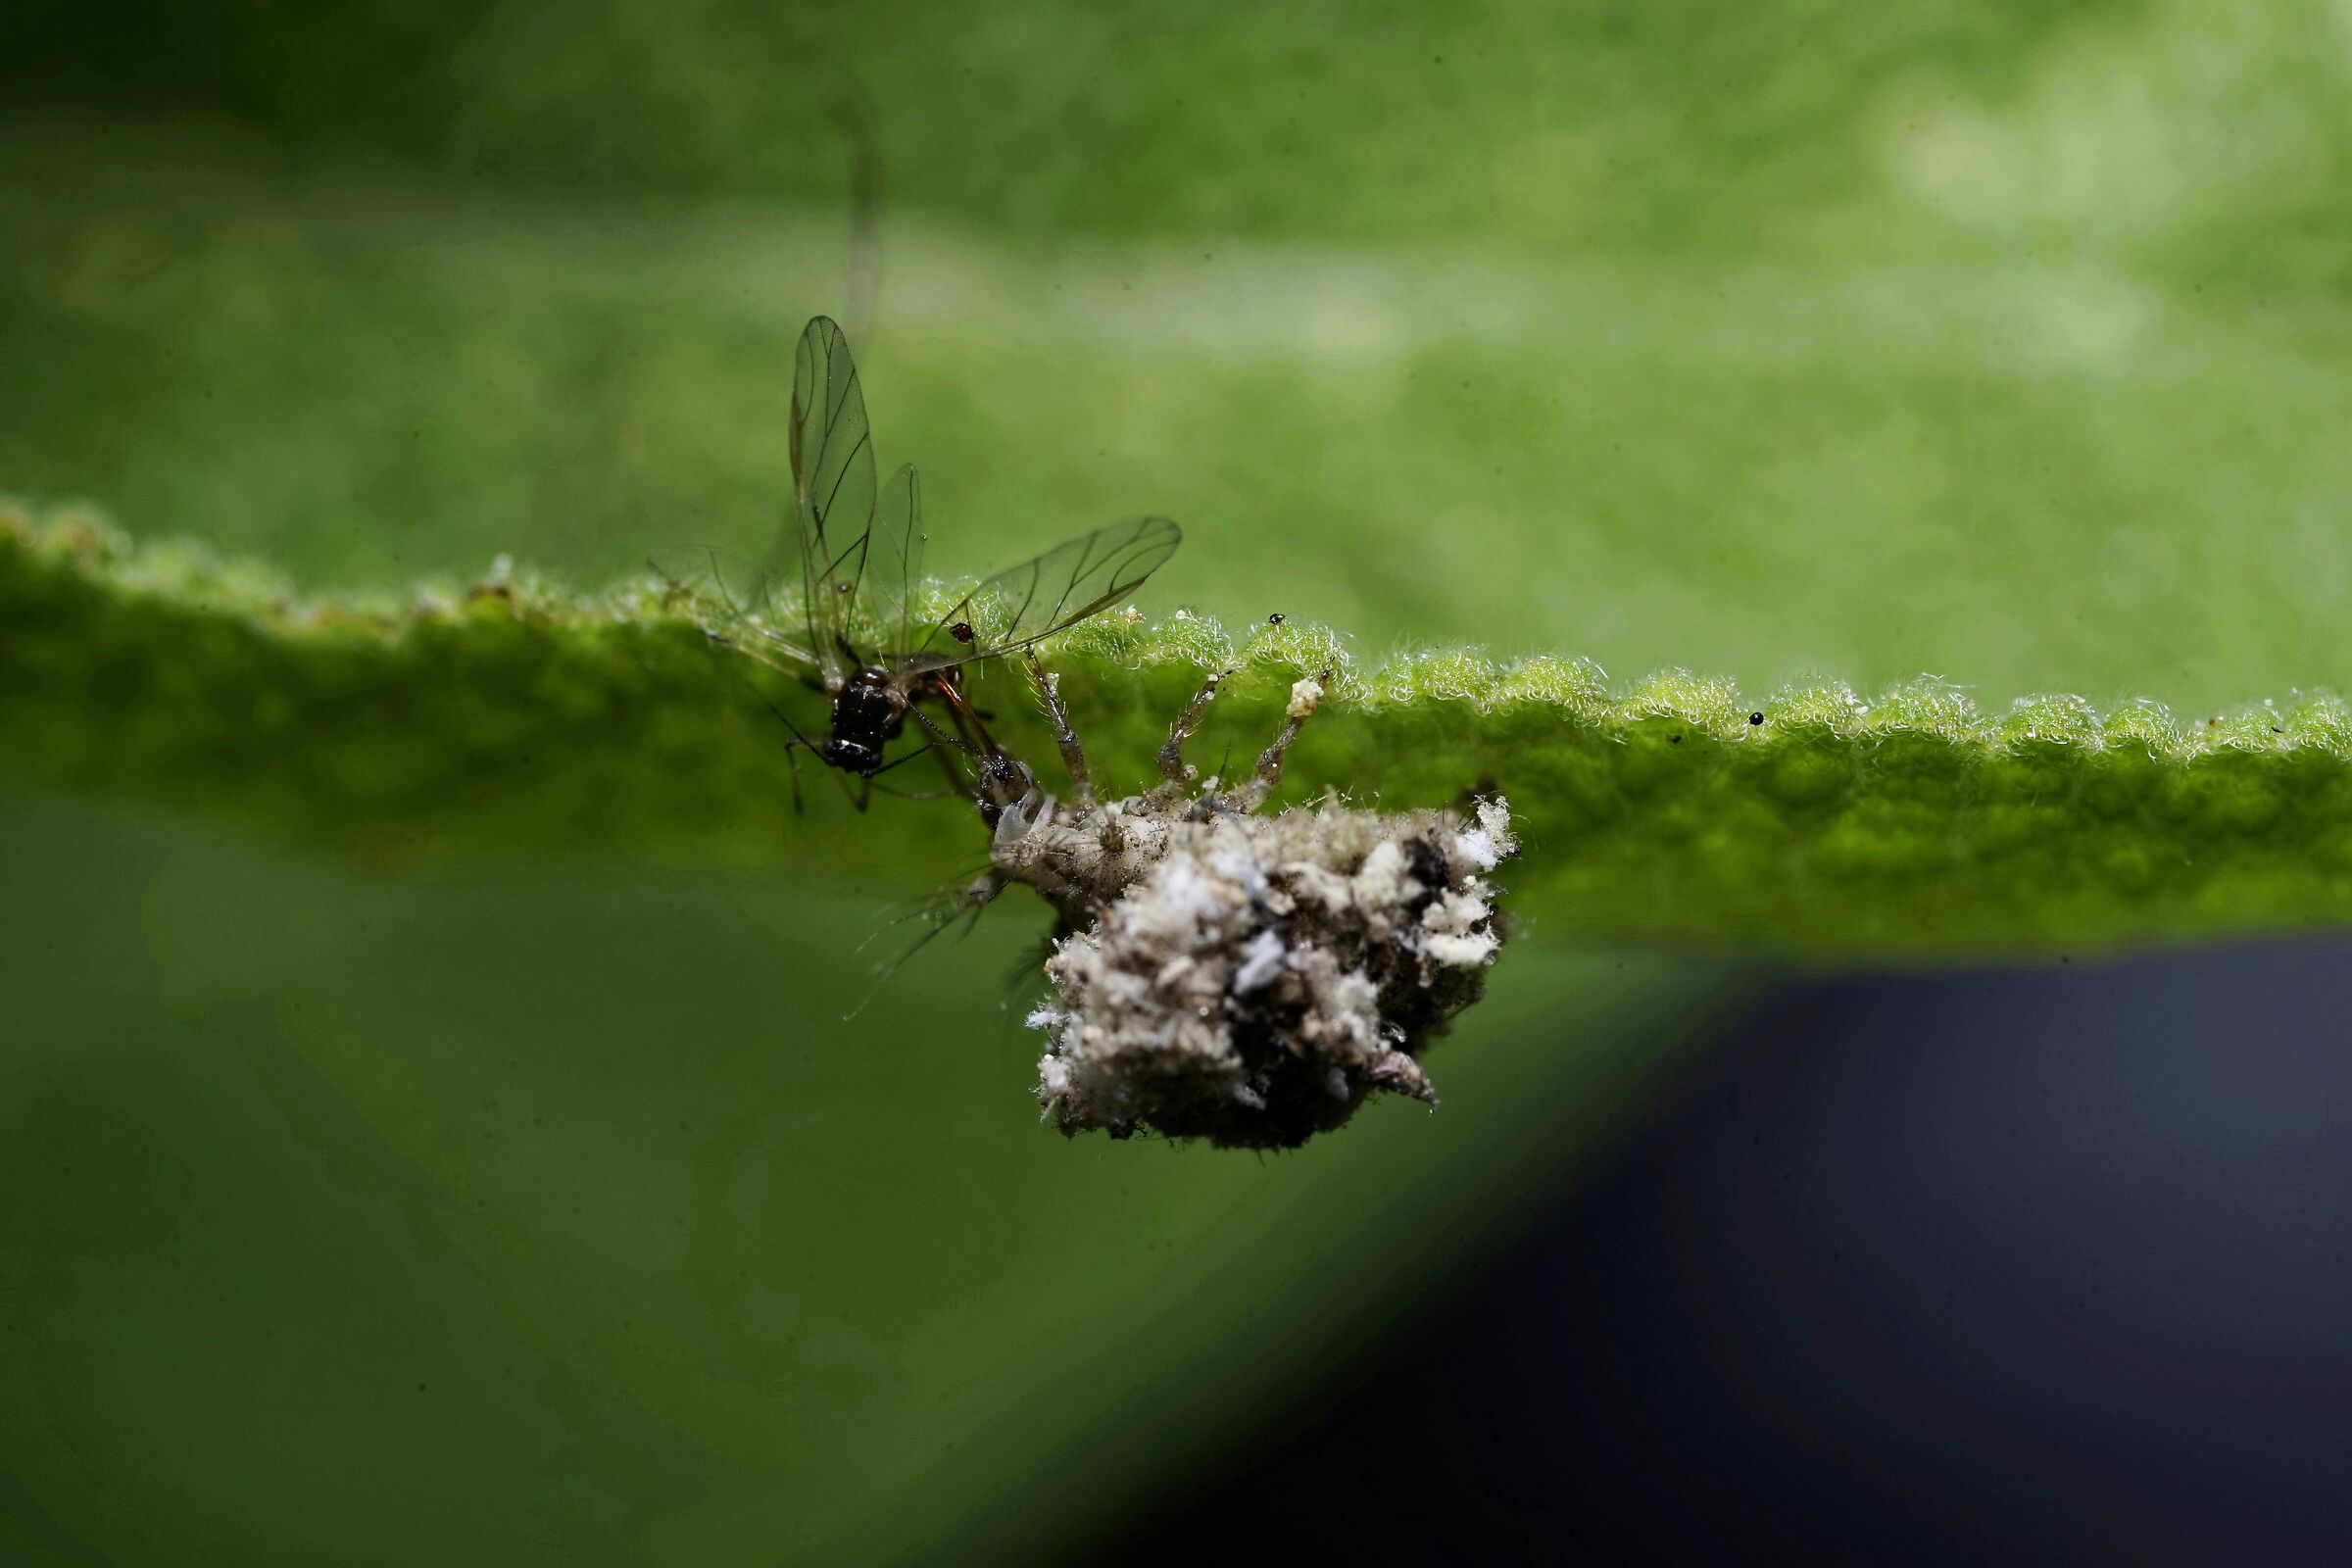 A larva of Cryptolaemus montrouzieri preys on an aphid...